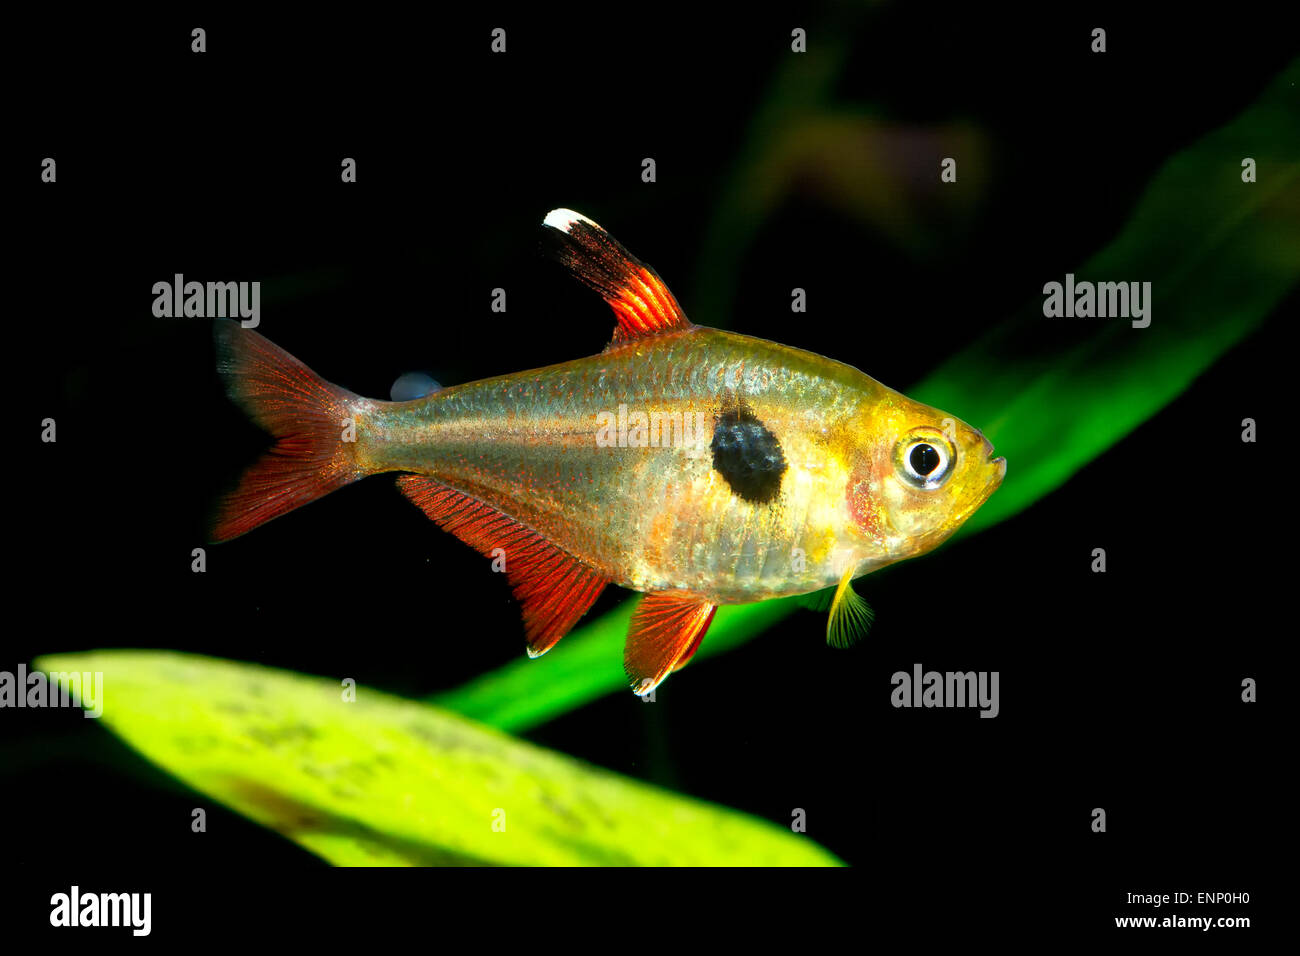 Nice aquarium tetra fish from genus Hyphessobrycon. Stock Photo